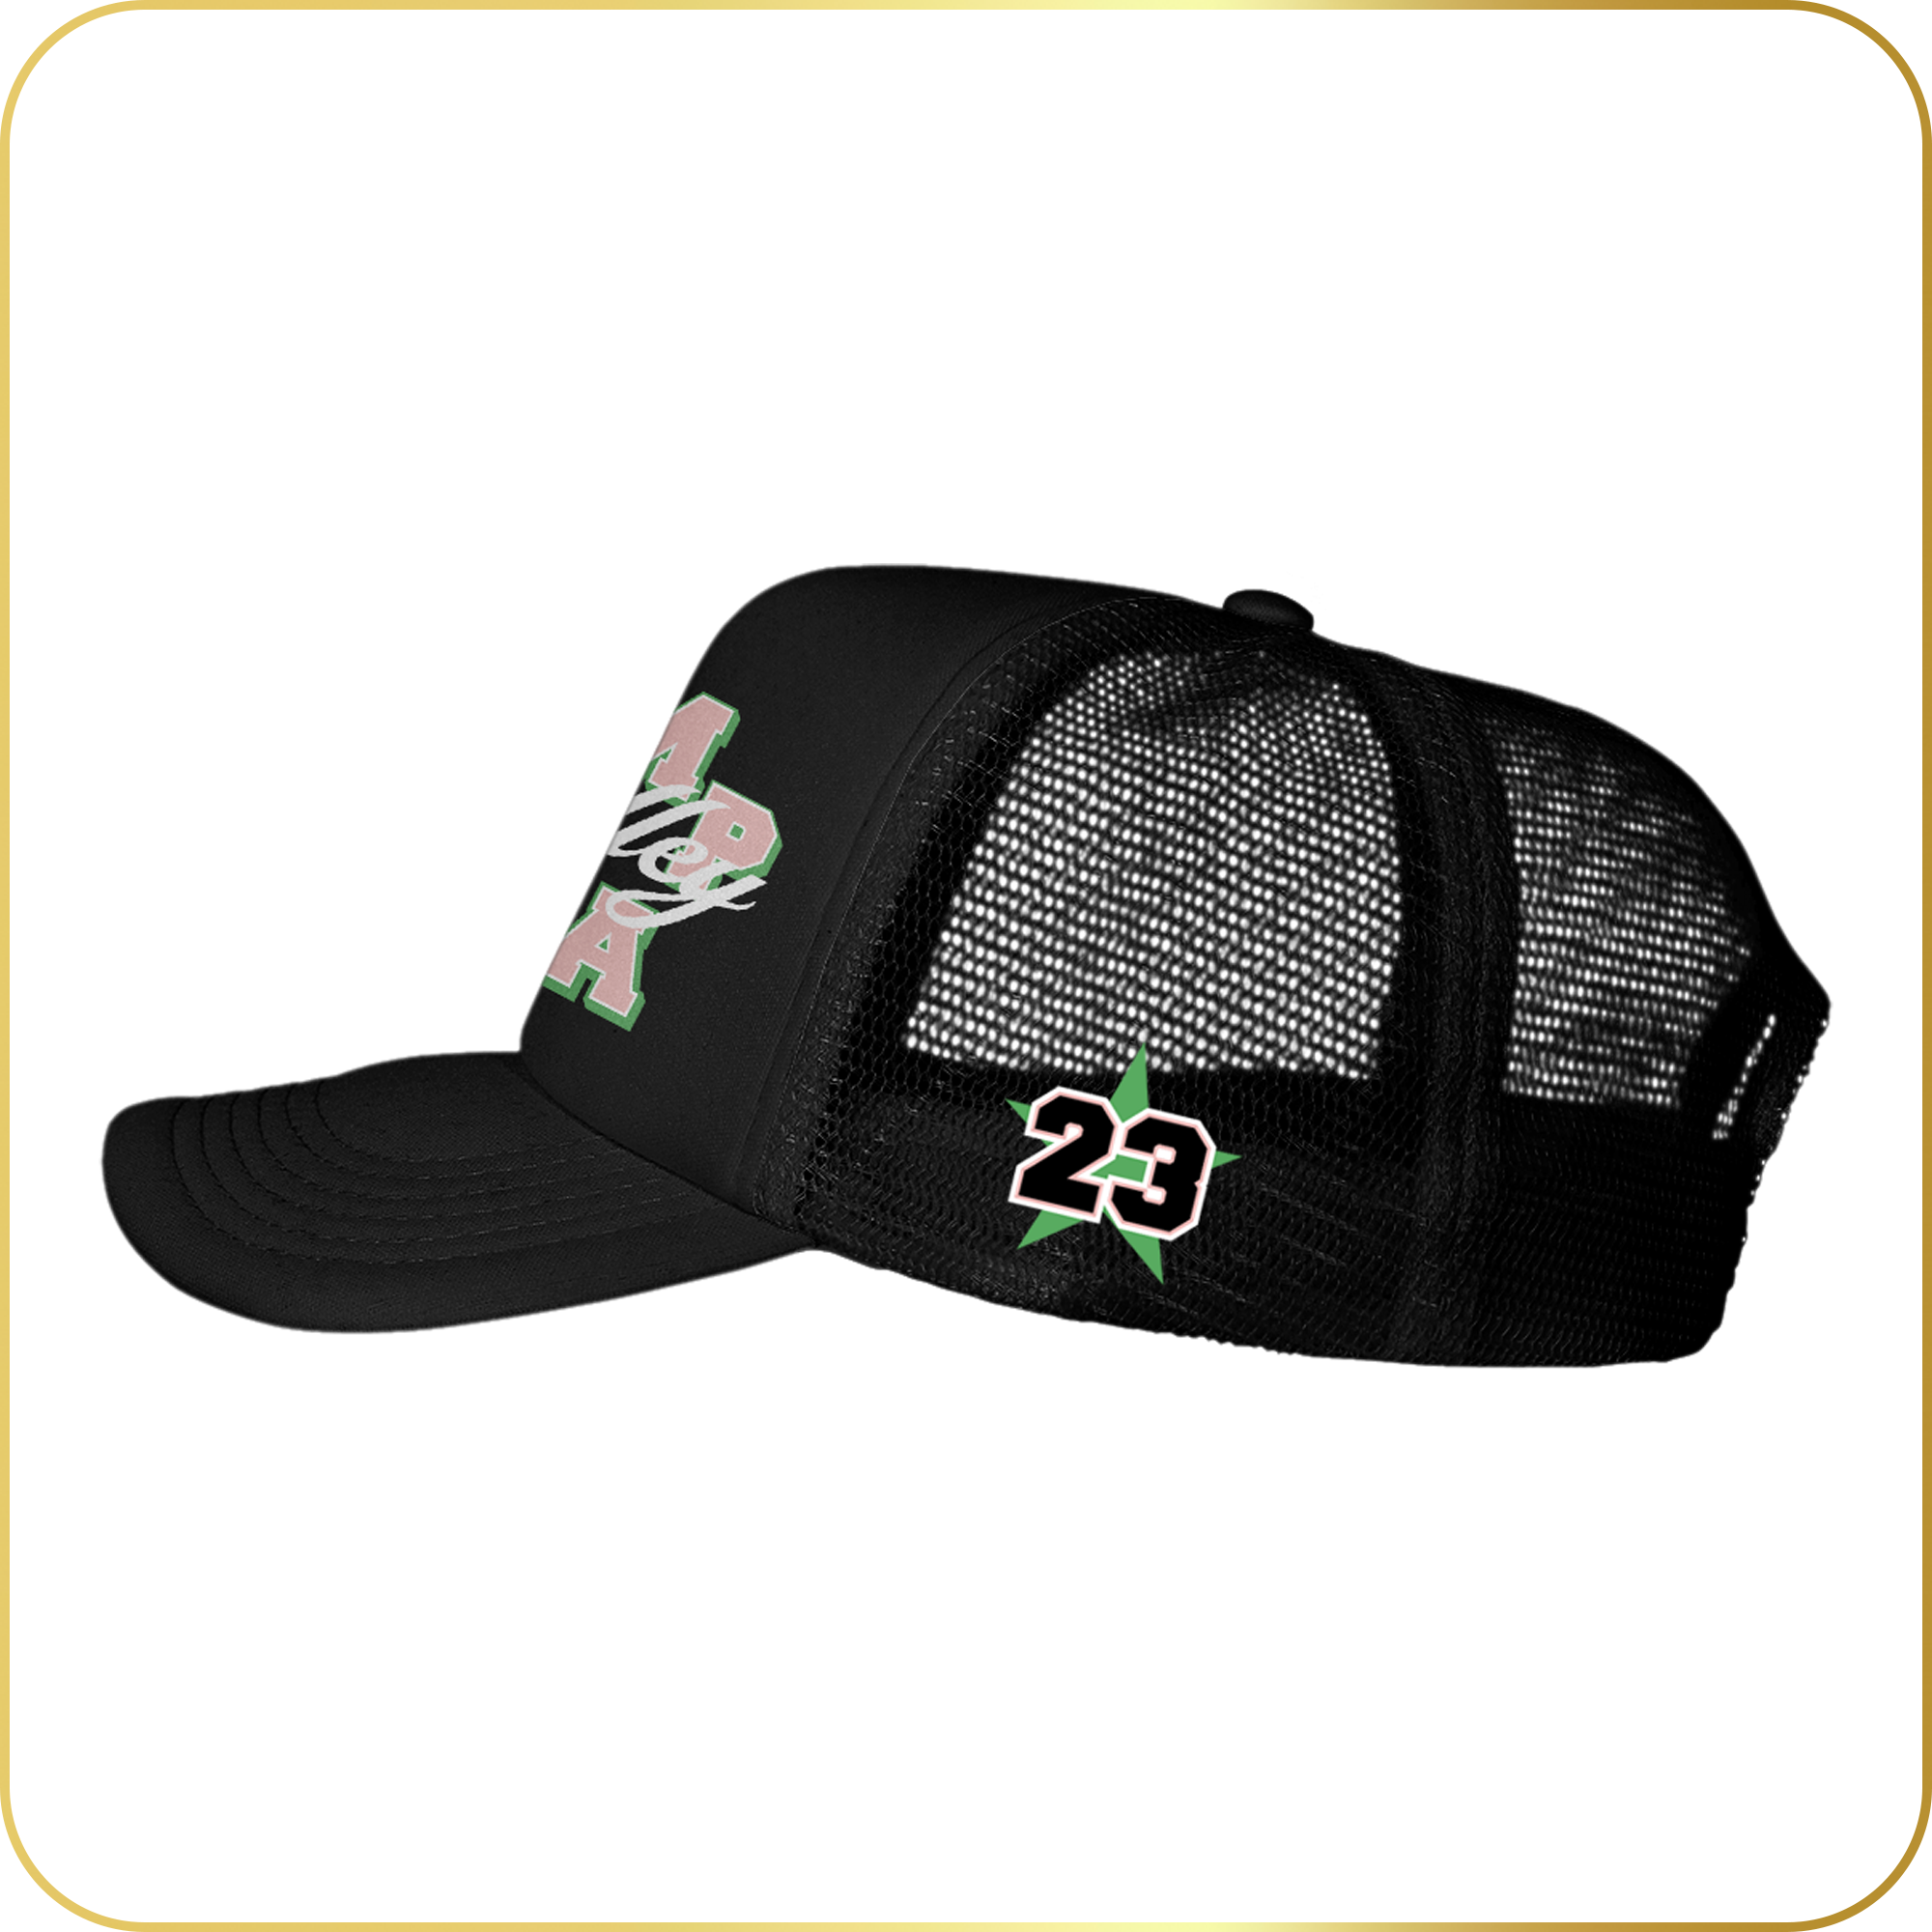 Champ '23 Trucker Hat